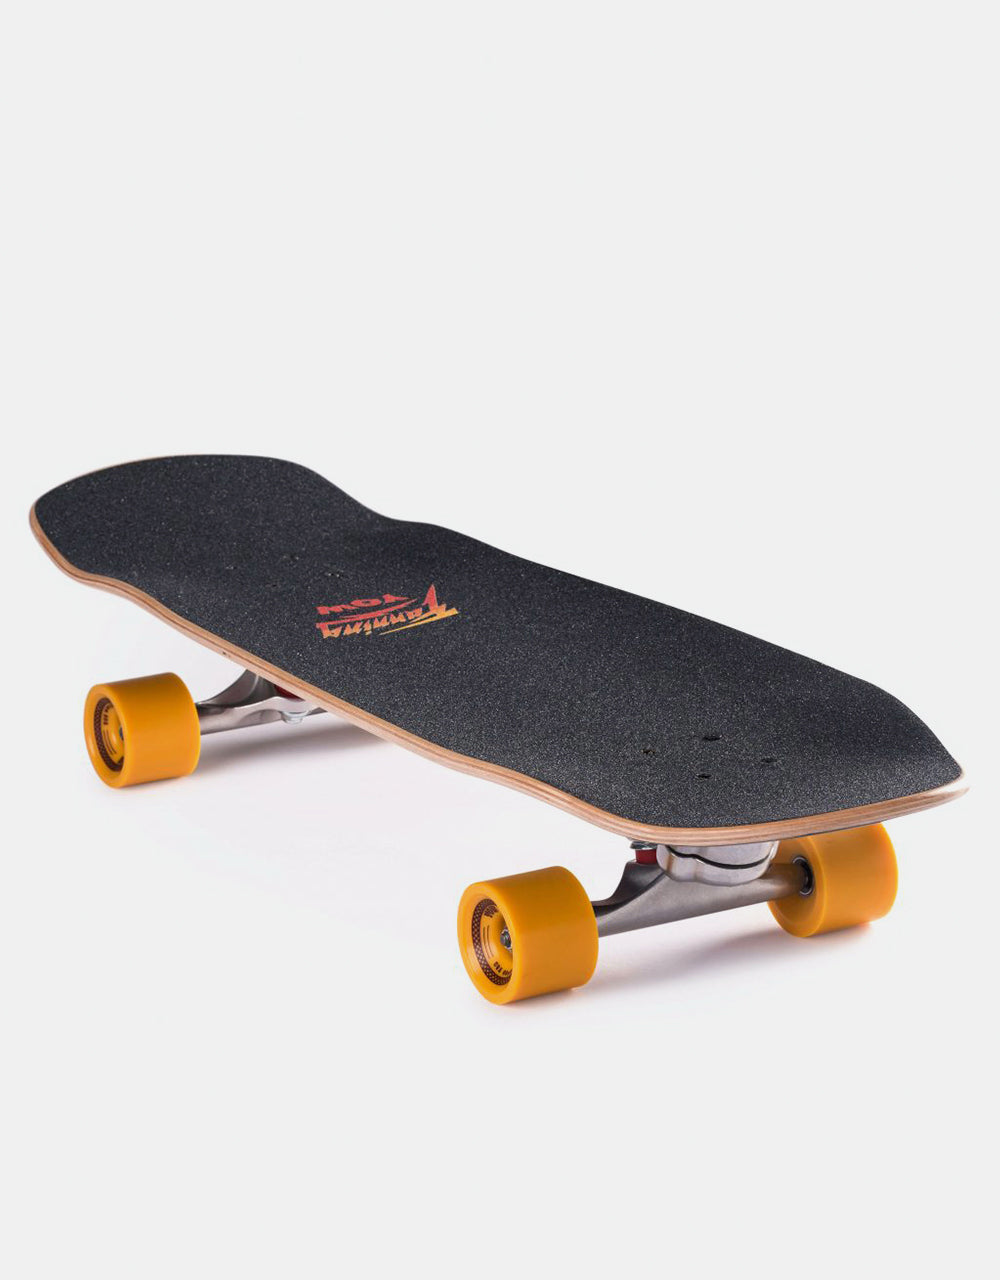 YOW Fanning Falcon SurfSkate Cruiser Skateboard - 10.25" x 33.5"